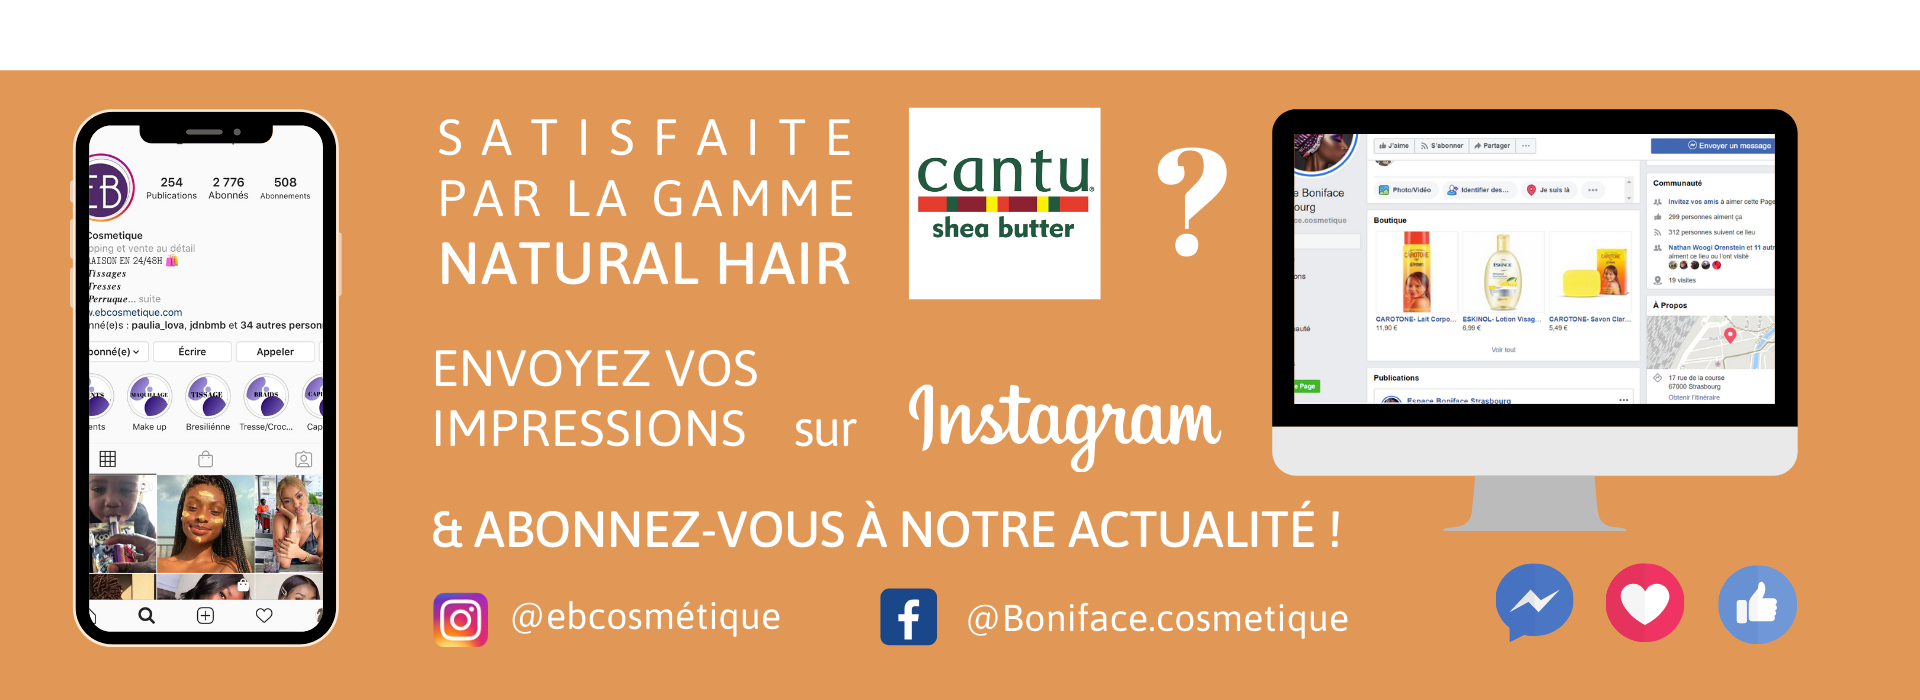 fiche produit ebcosmetique cantu shea butter natural hair shine and hold mist routine capillaire afro bouclé facebook instagram